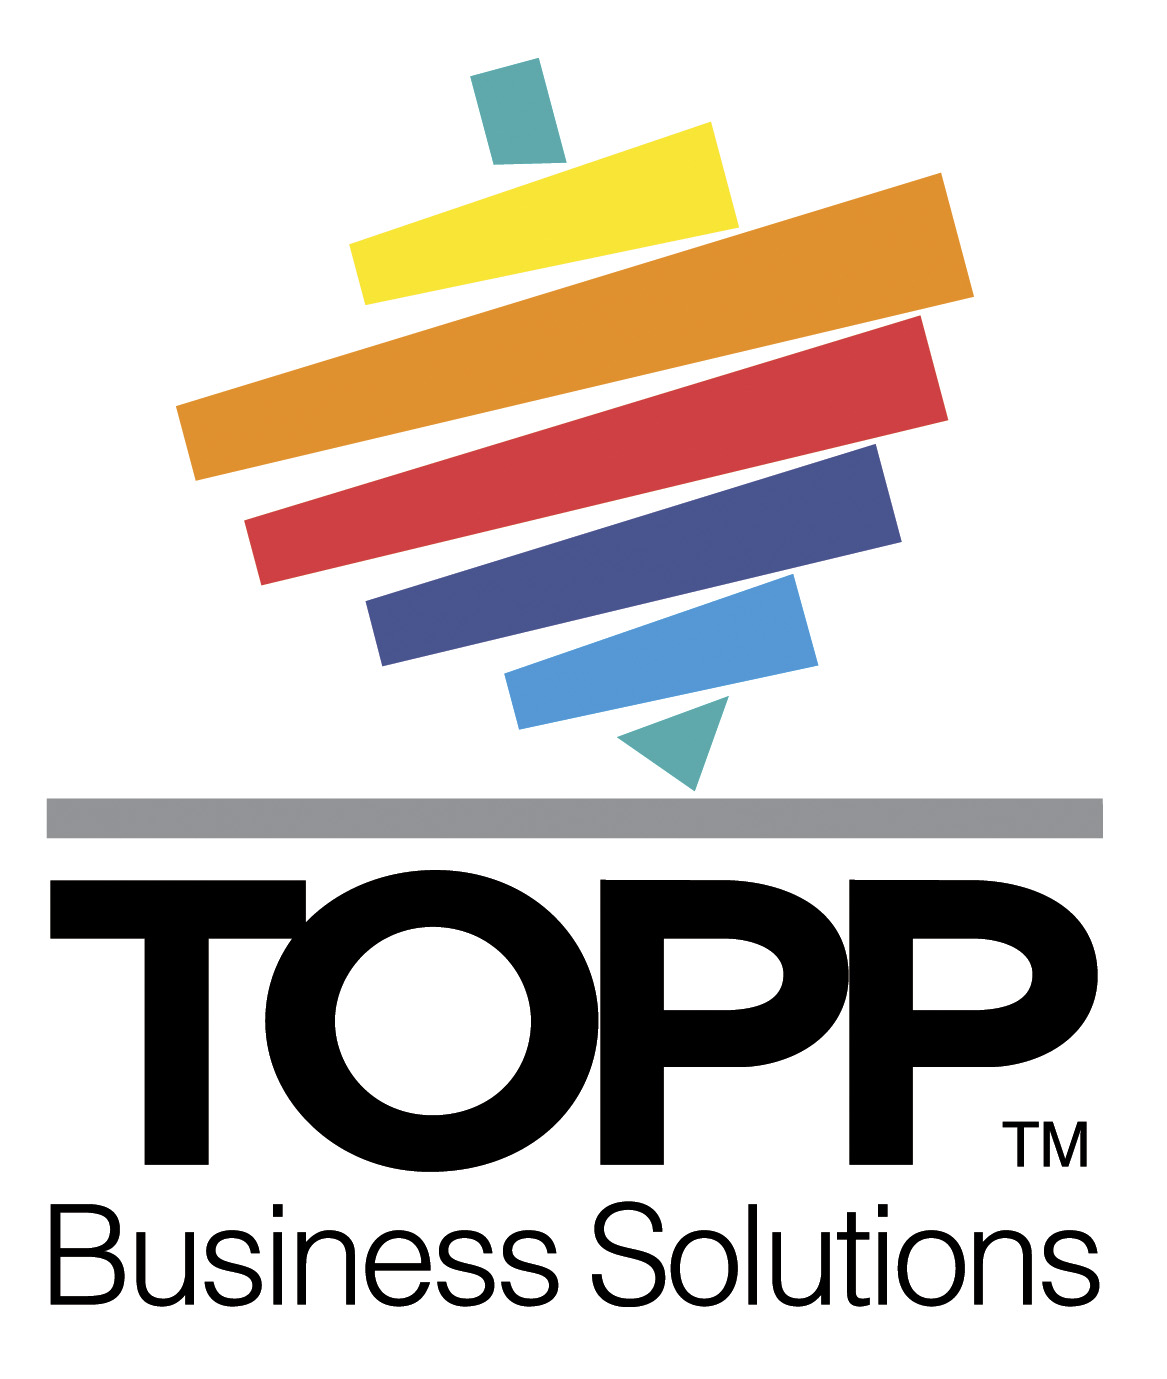 topp-Business Solutions-logo